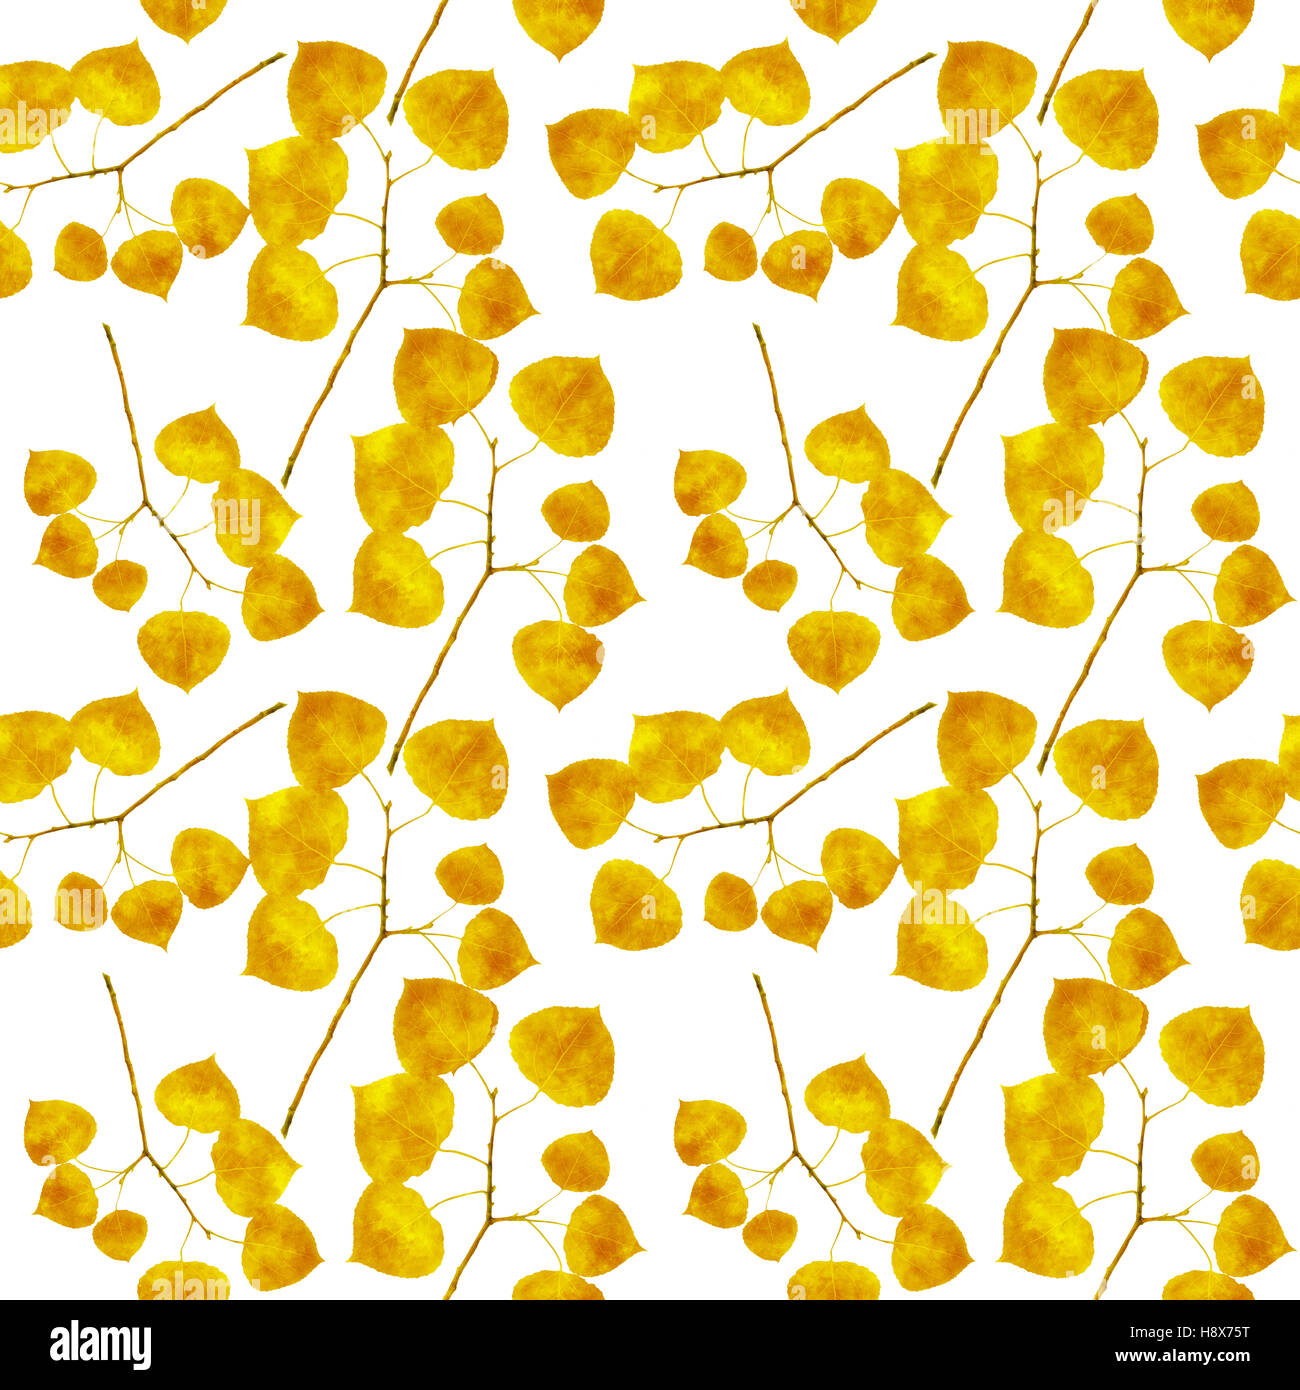 Aspen leaves seamless repeat pattern Stock Photo